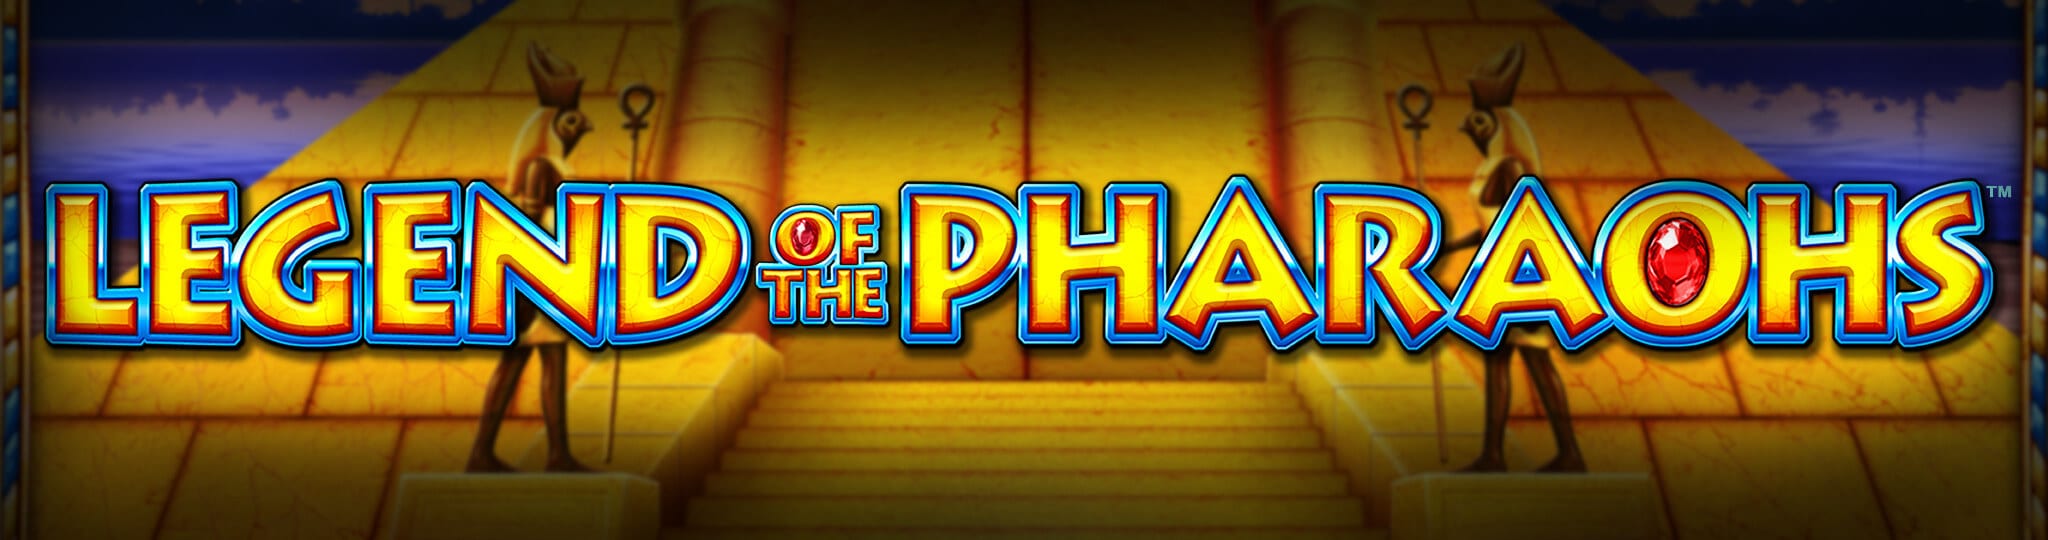 legend of the pharaohs slots game logo